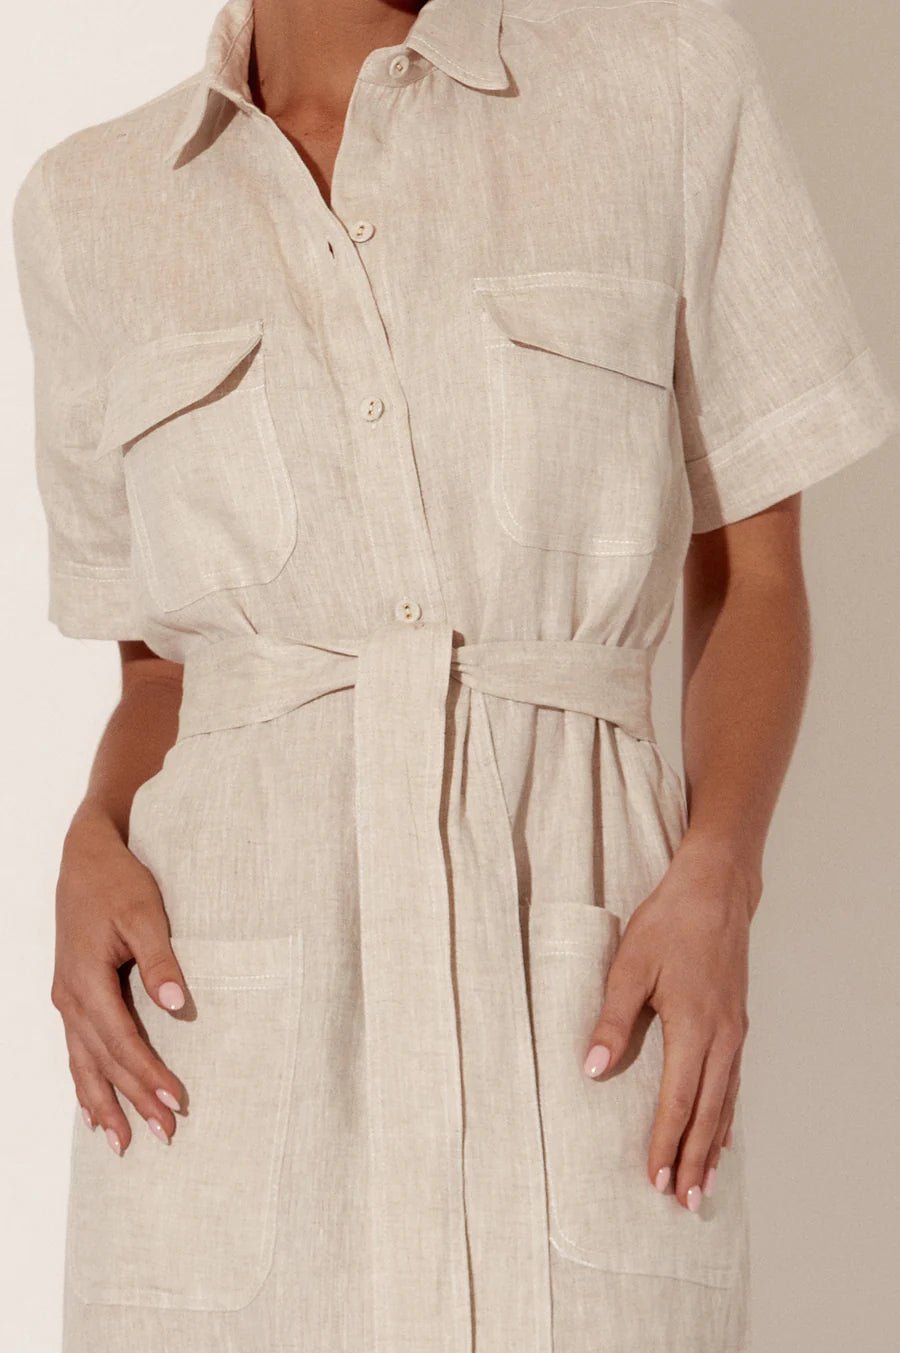 Petrina Short Sleeve Linen Dress (Natural) - Something For Me​​